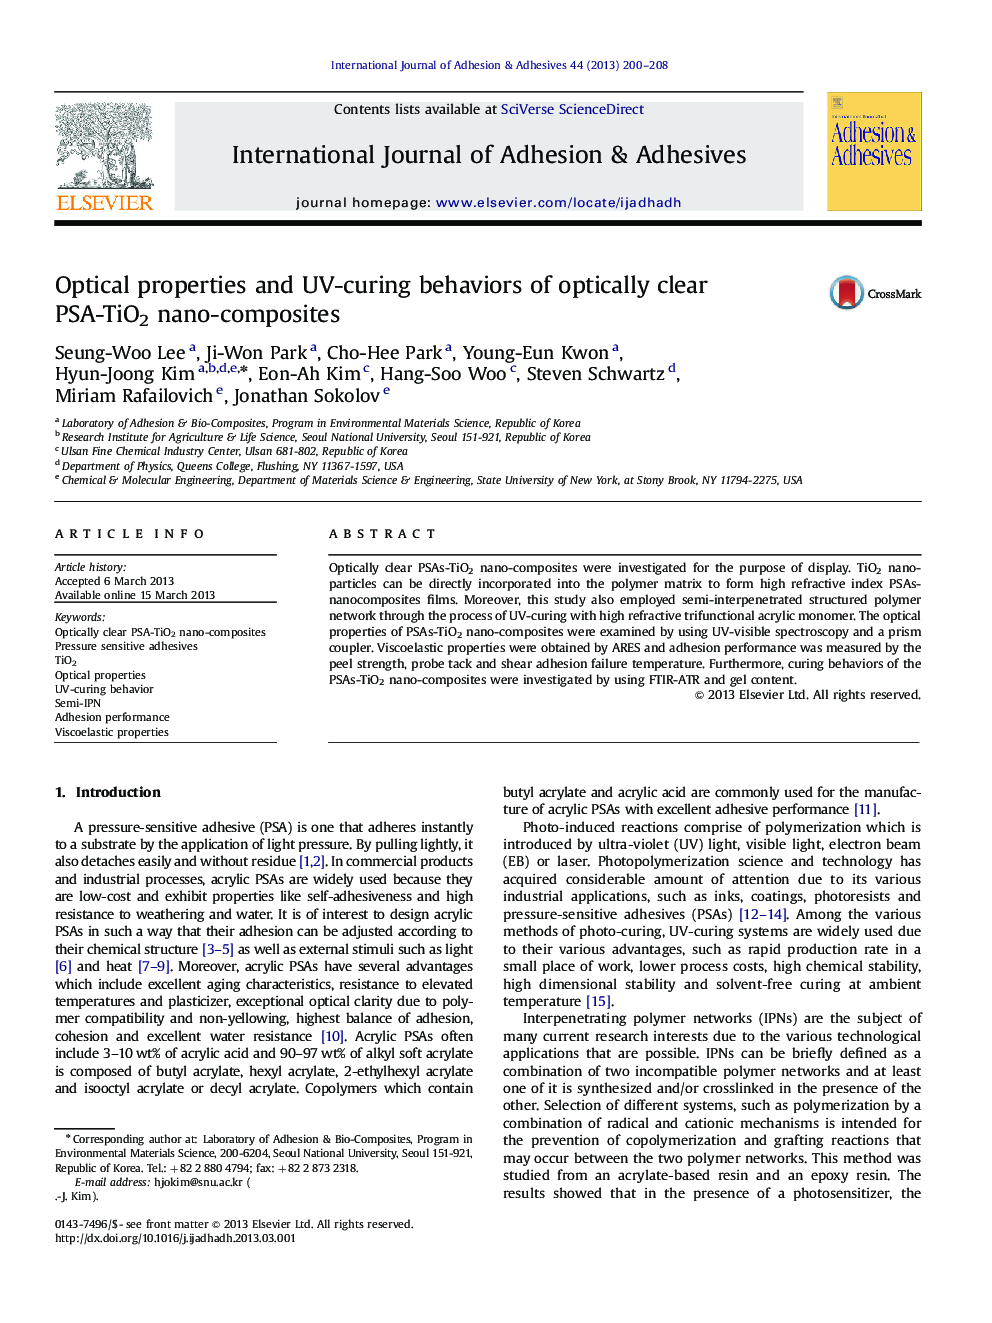 Optical properties and UV-curing behaviors of optically clear PSA-TiO2 nano-composites